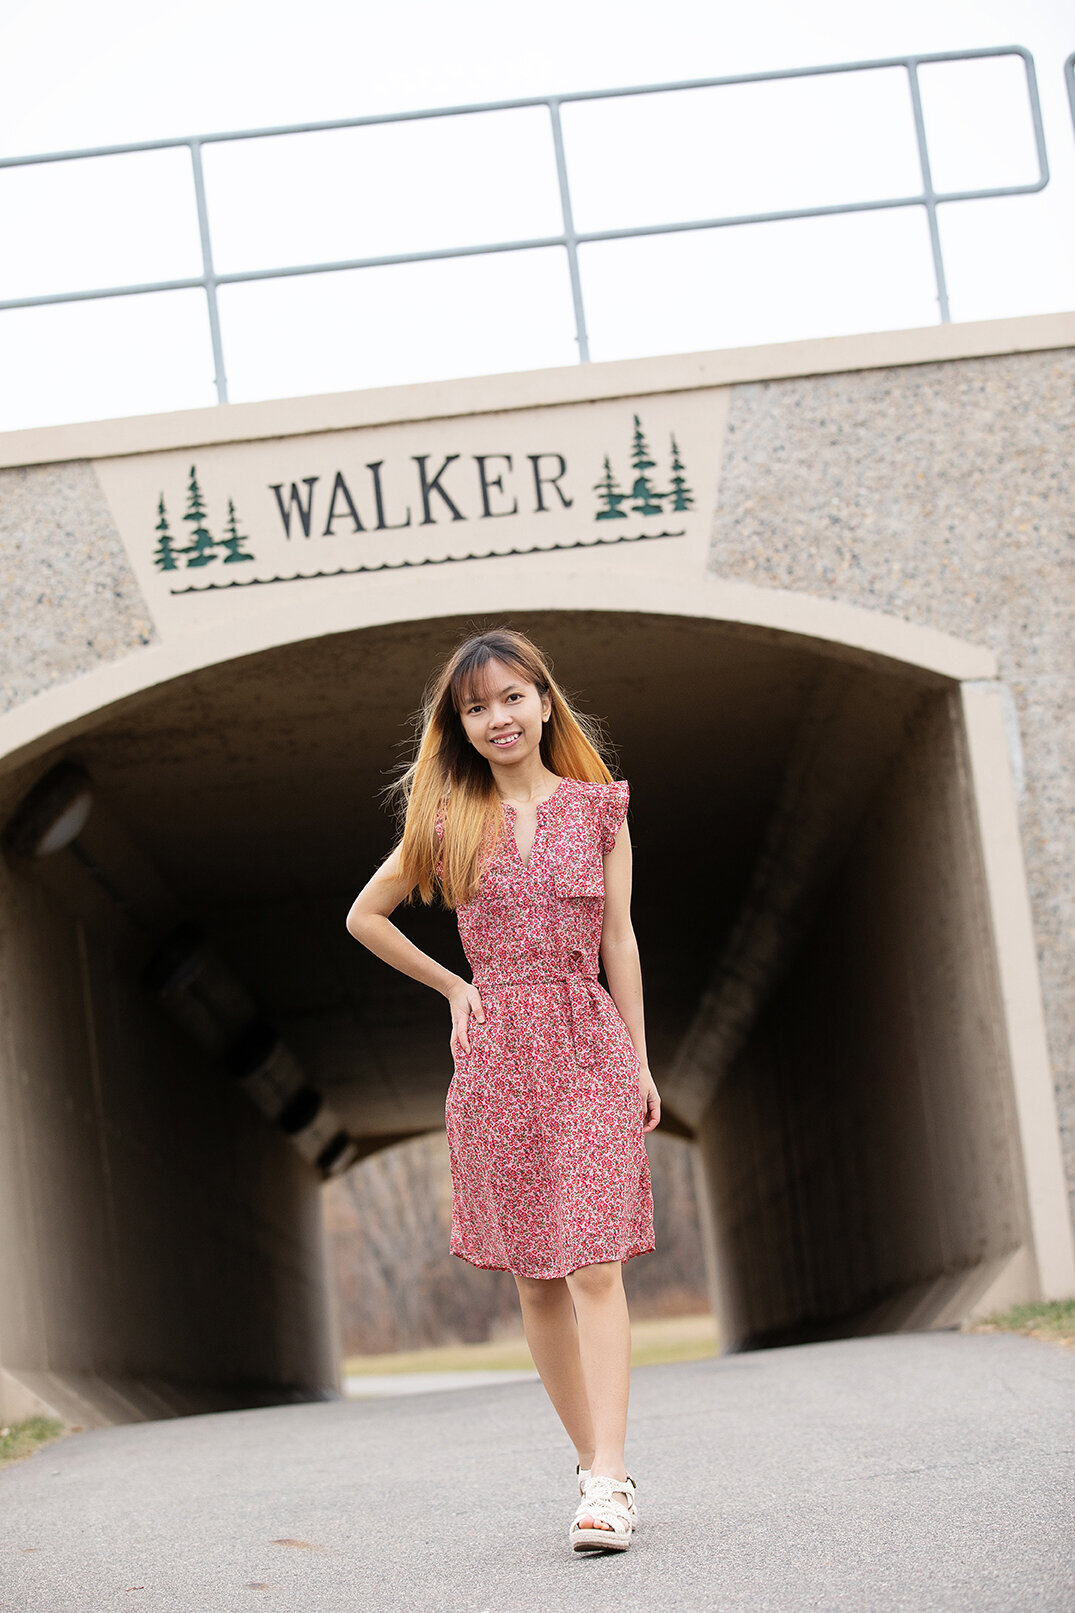 High School senior girl wearing pink dress walking towards camera outdoors with tunnel behind her Walker, Minnesota.